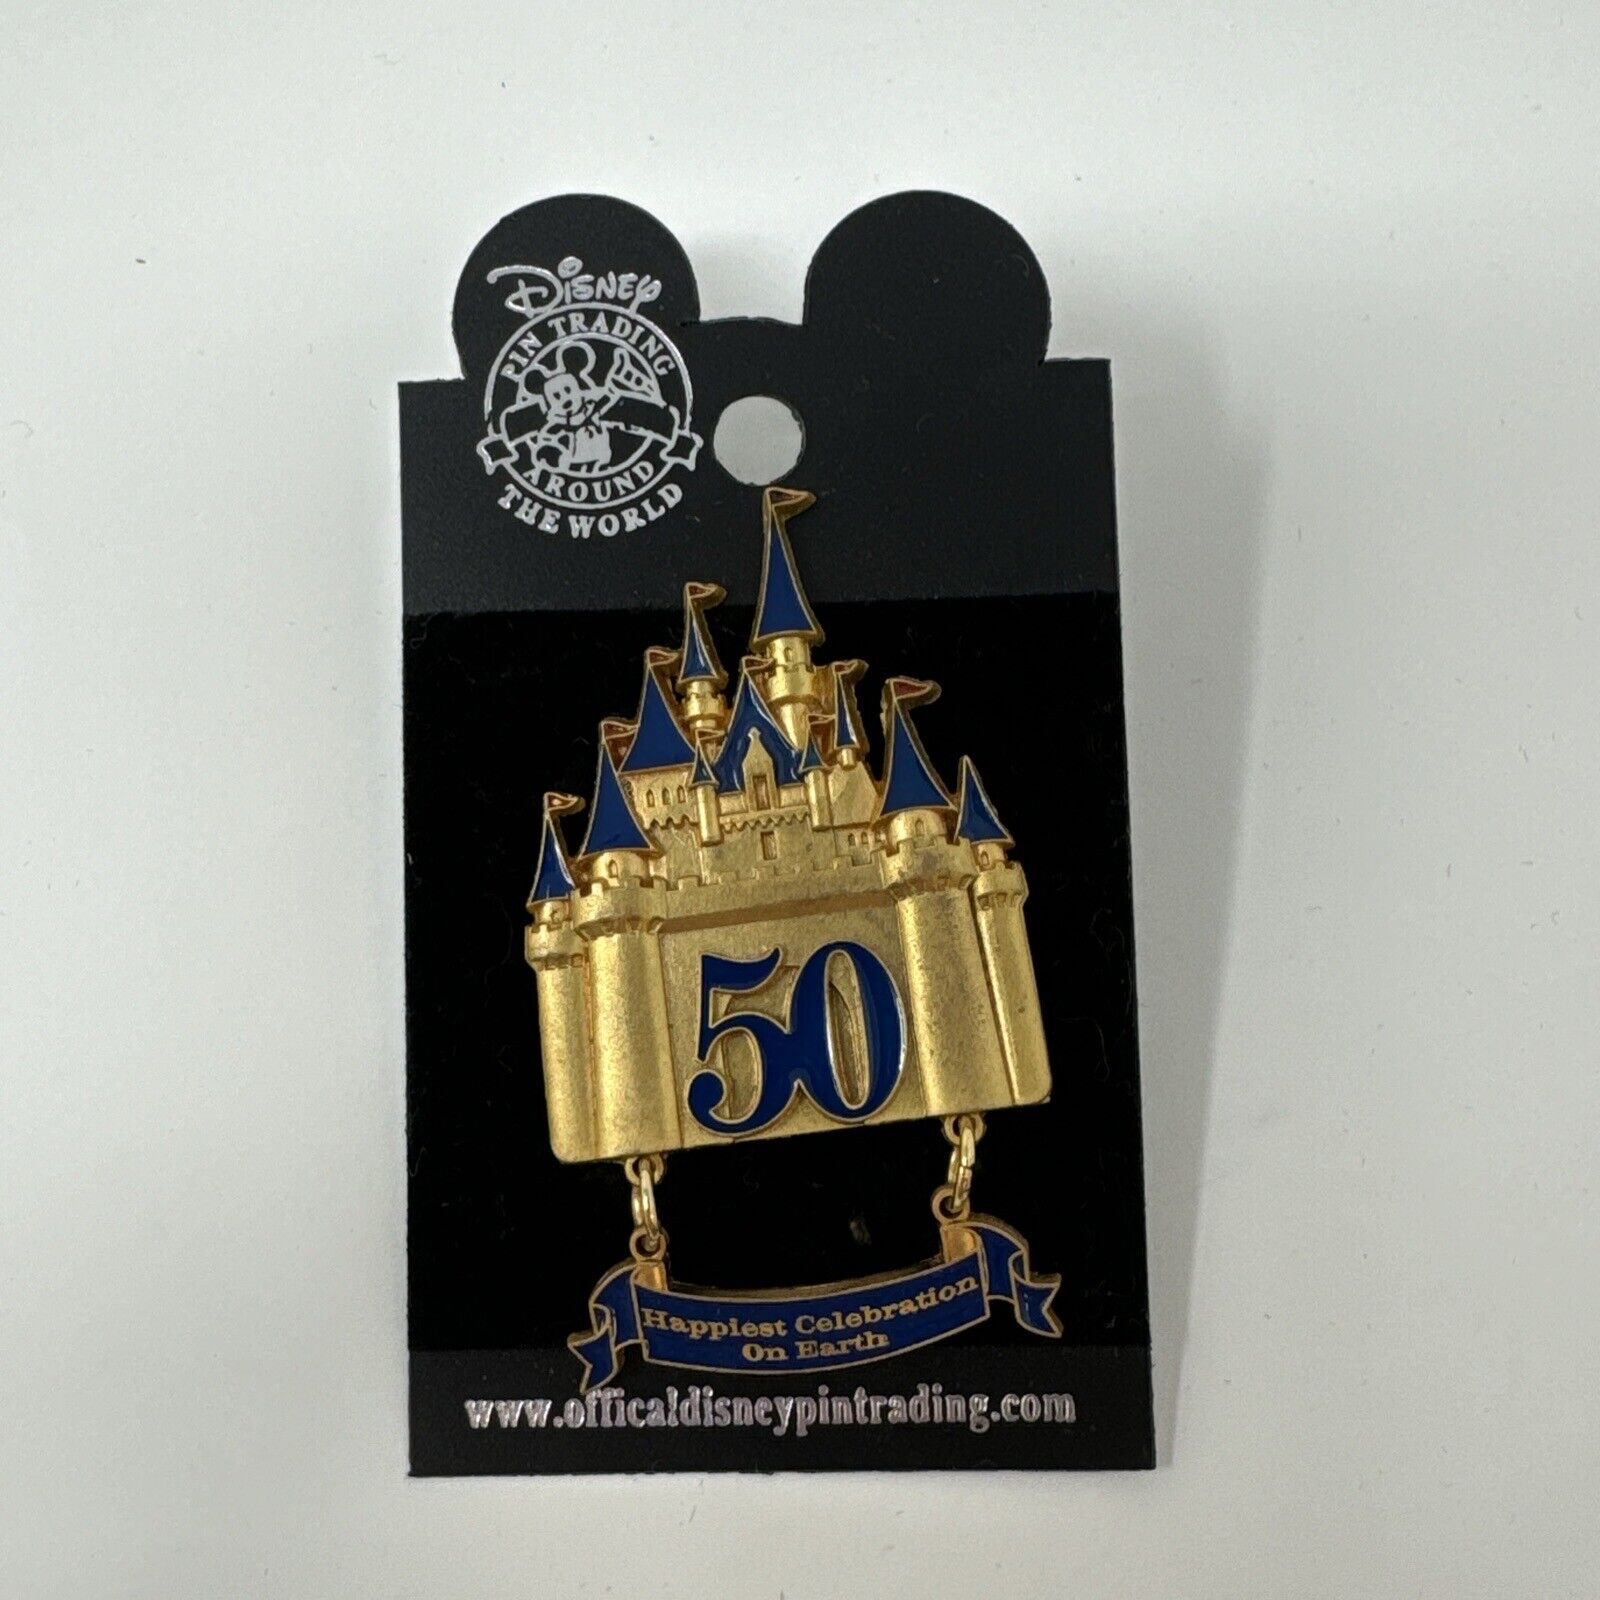 2005 Disney Pin 50th Anniversary Castle Happiest Celebration on Earth Disneyland